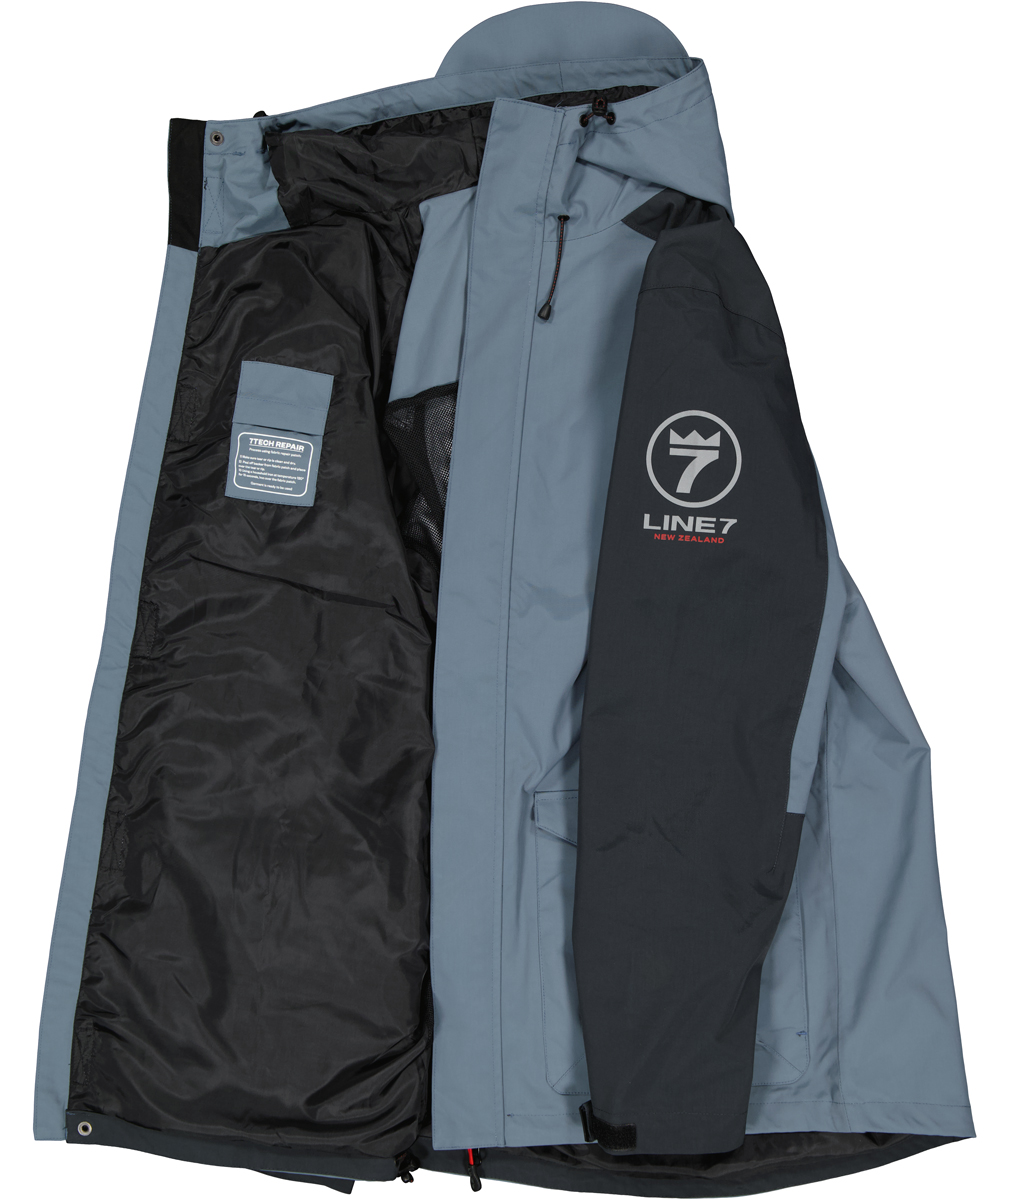 Line7 Storm Armour10 Waterproof Jacket